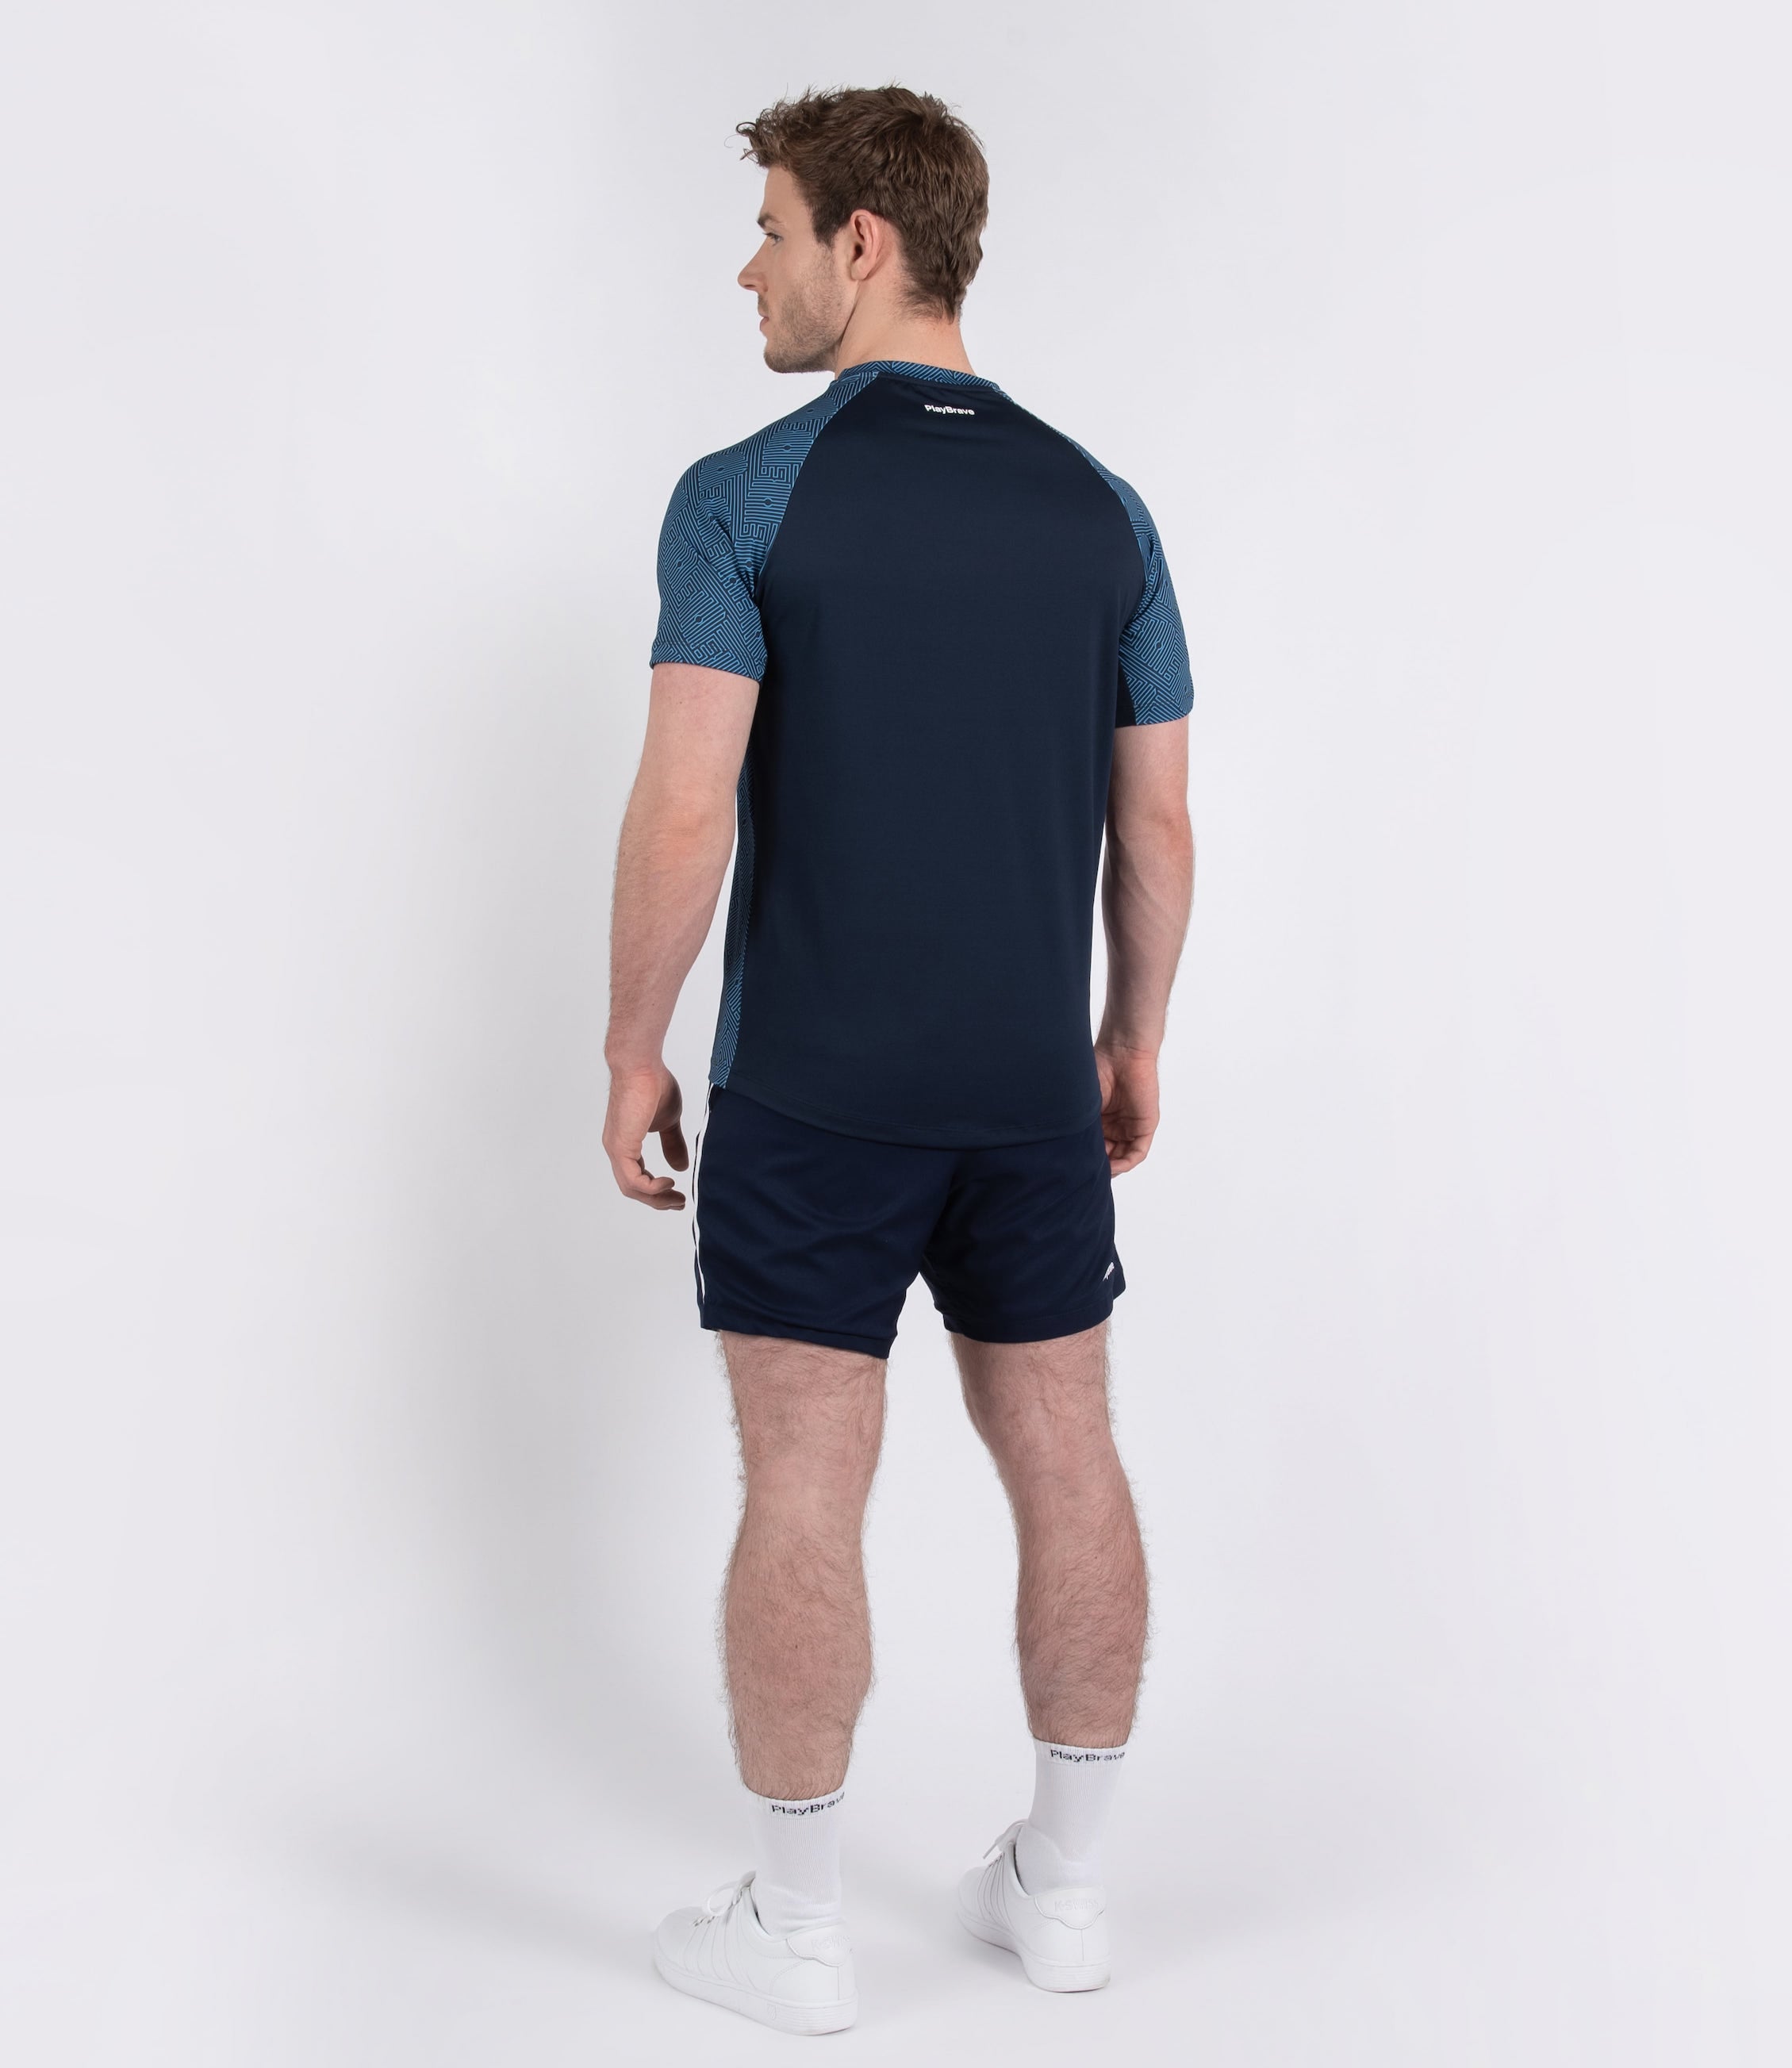 Mens Tenniswear-Men's Tops-PlayBrave-Philip Tee - Navy/Brilliant Blue-PlayBrave Sports